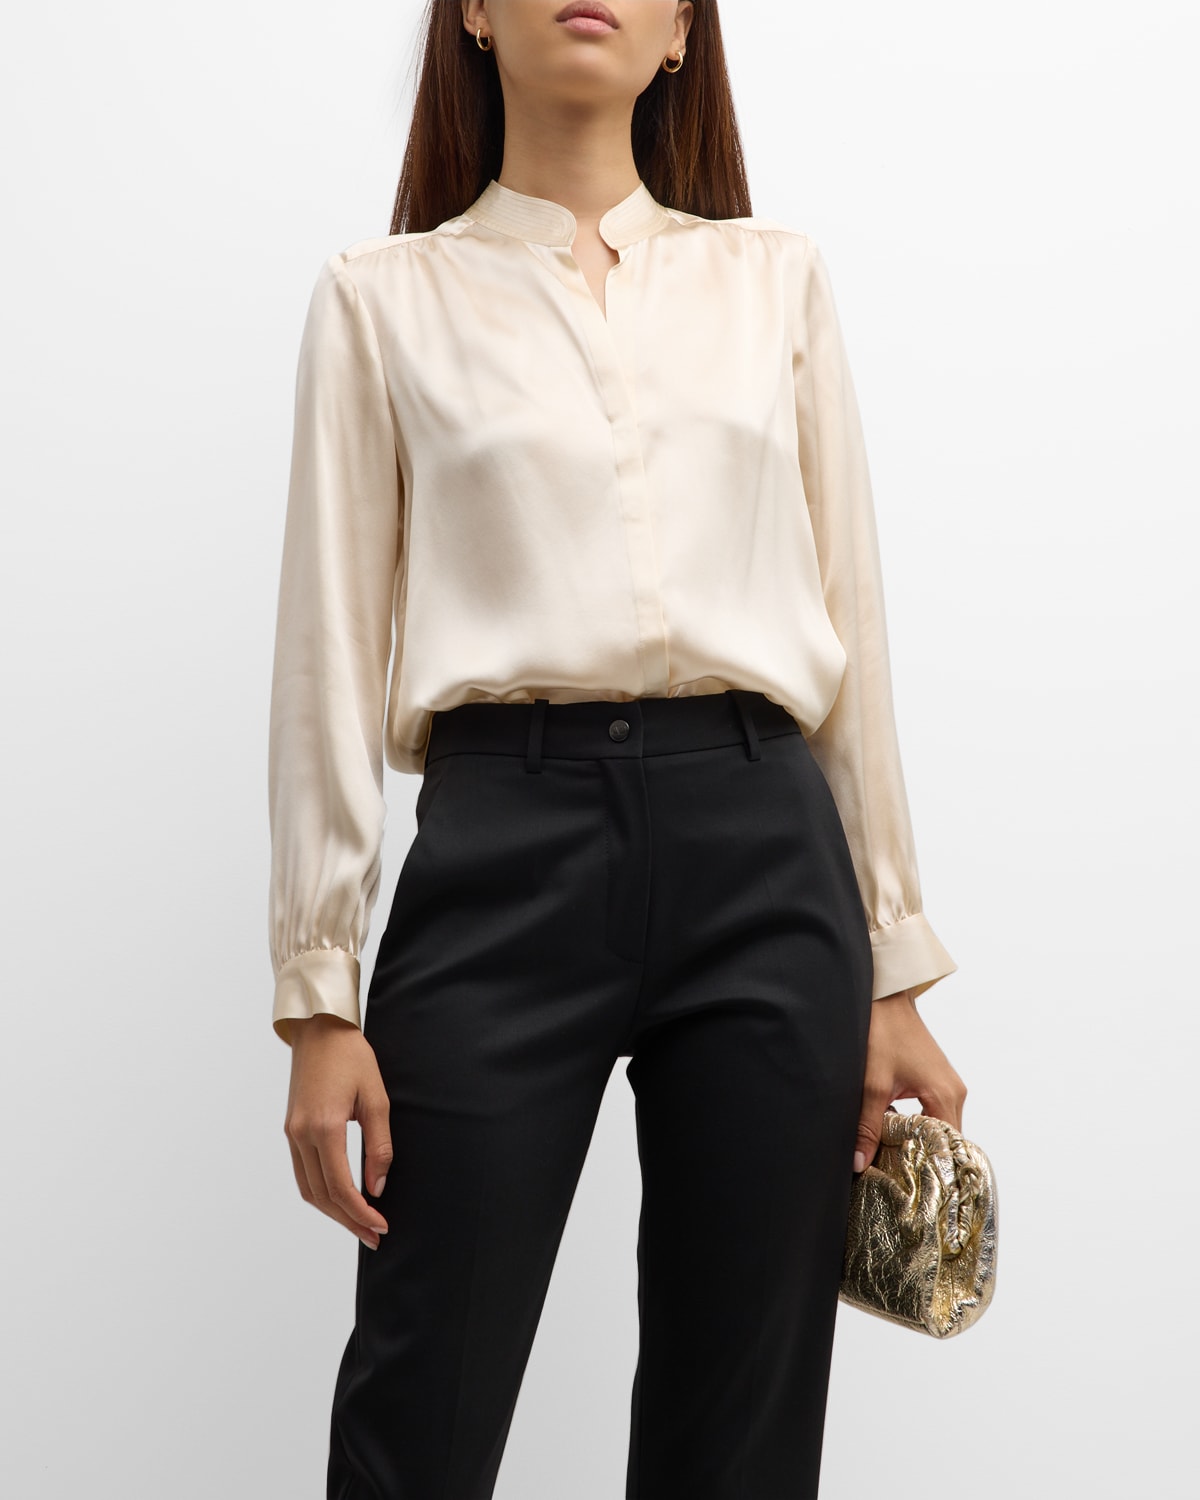 L'AGENCE, Bianca' silk blouse, Women